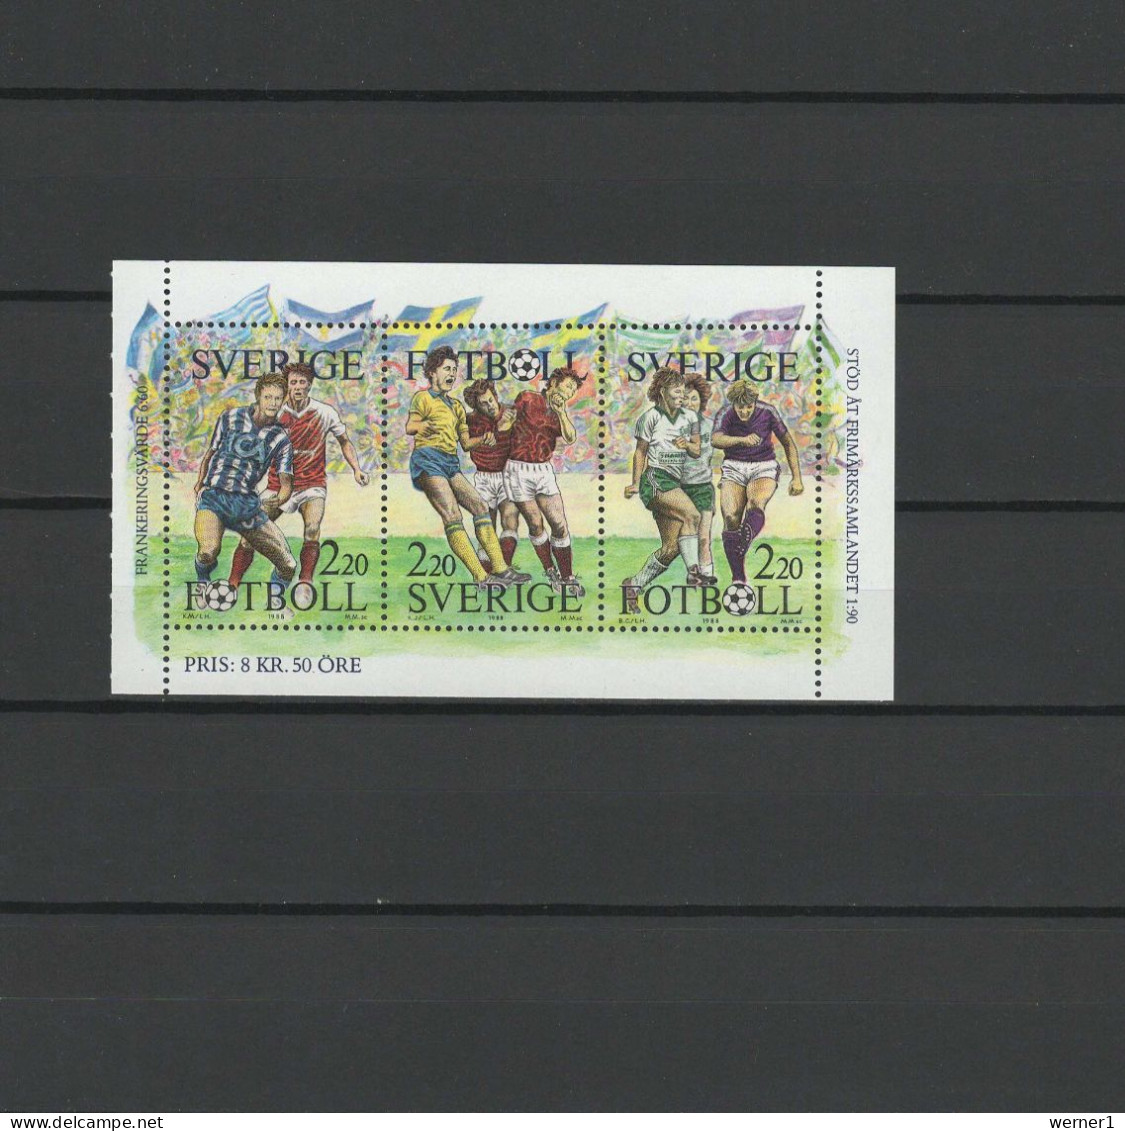 Sweden 1988 Football Soccer Booklet Pane MNH - Unused Stamps